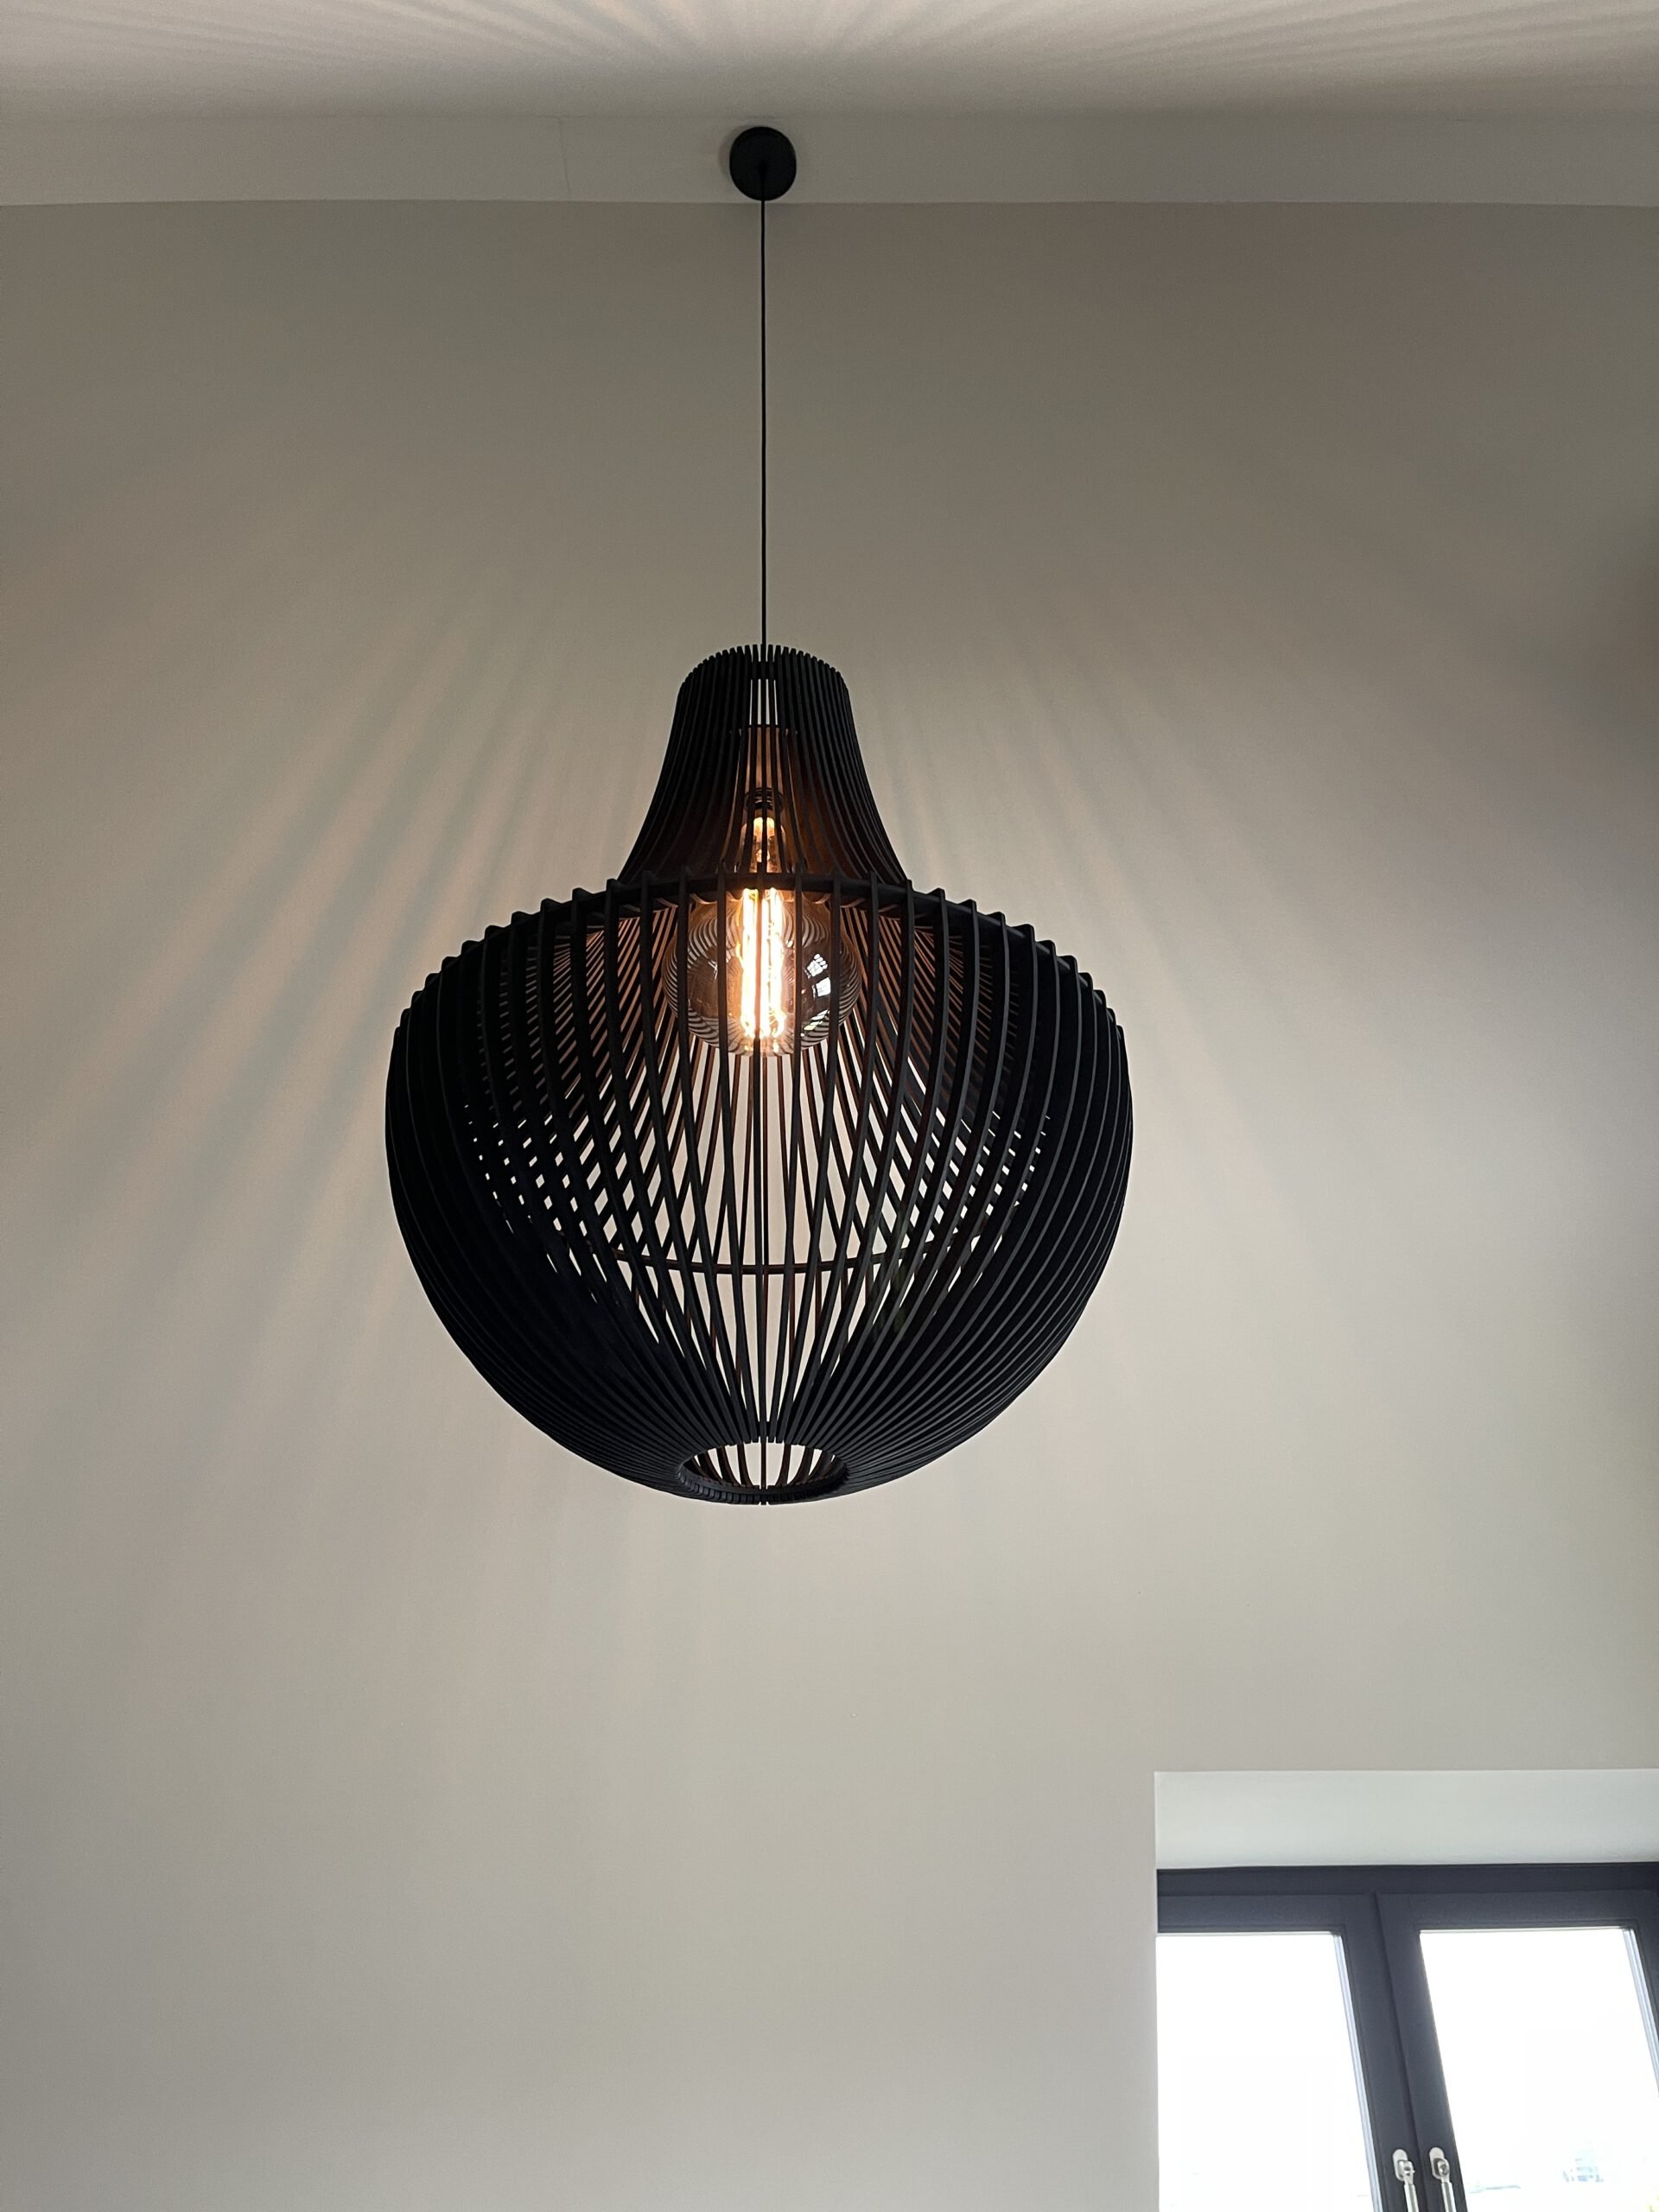 Corona hanglamp 110cm Innofique Design